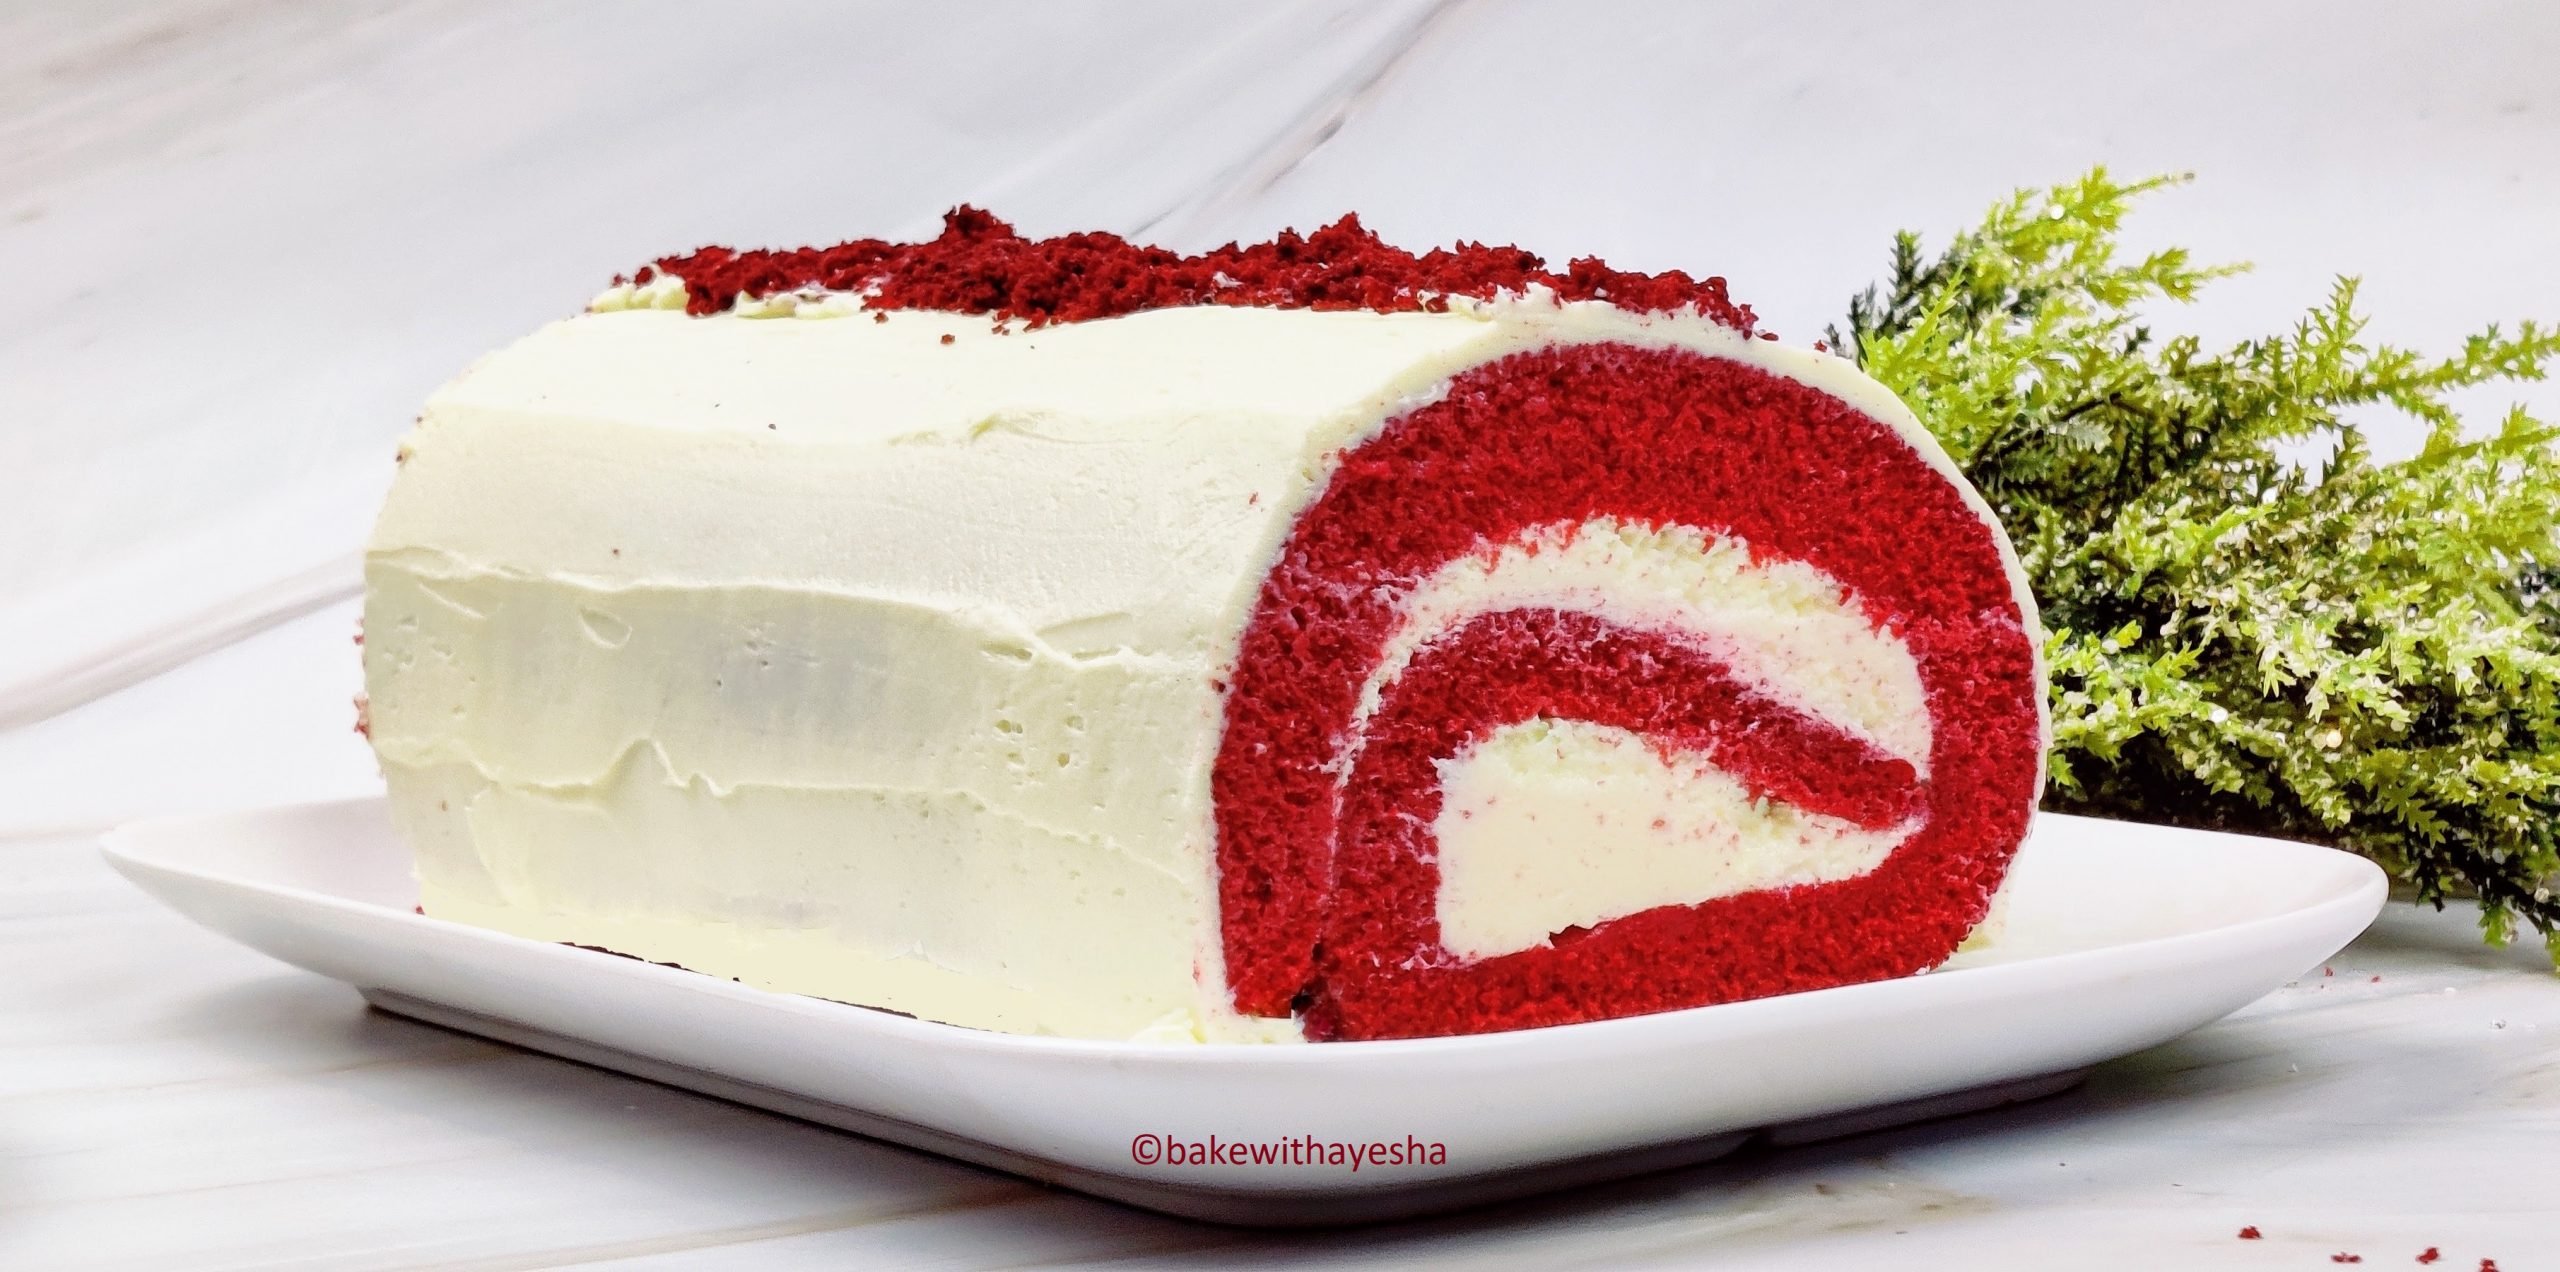 Красный бархат торт шобутинской. Красный бархат с клубничным конфи. Торт красный бархат Гулливер. Бисквитный торт с клубничным конфи. Бисквит красное и белое.